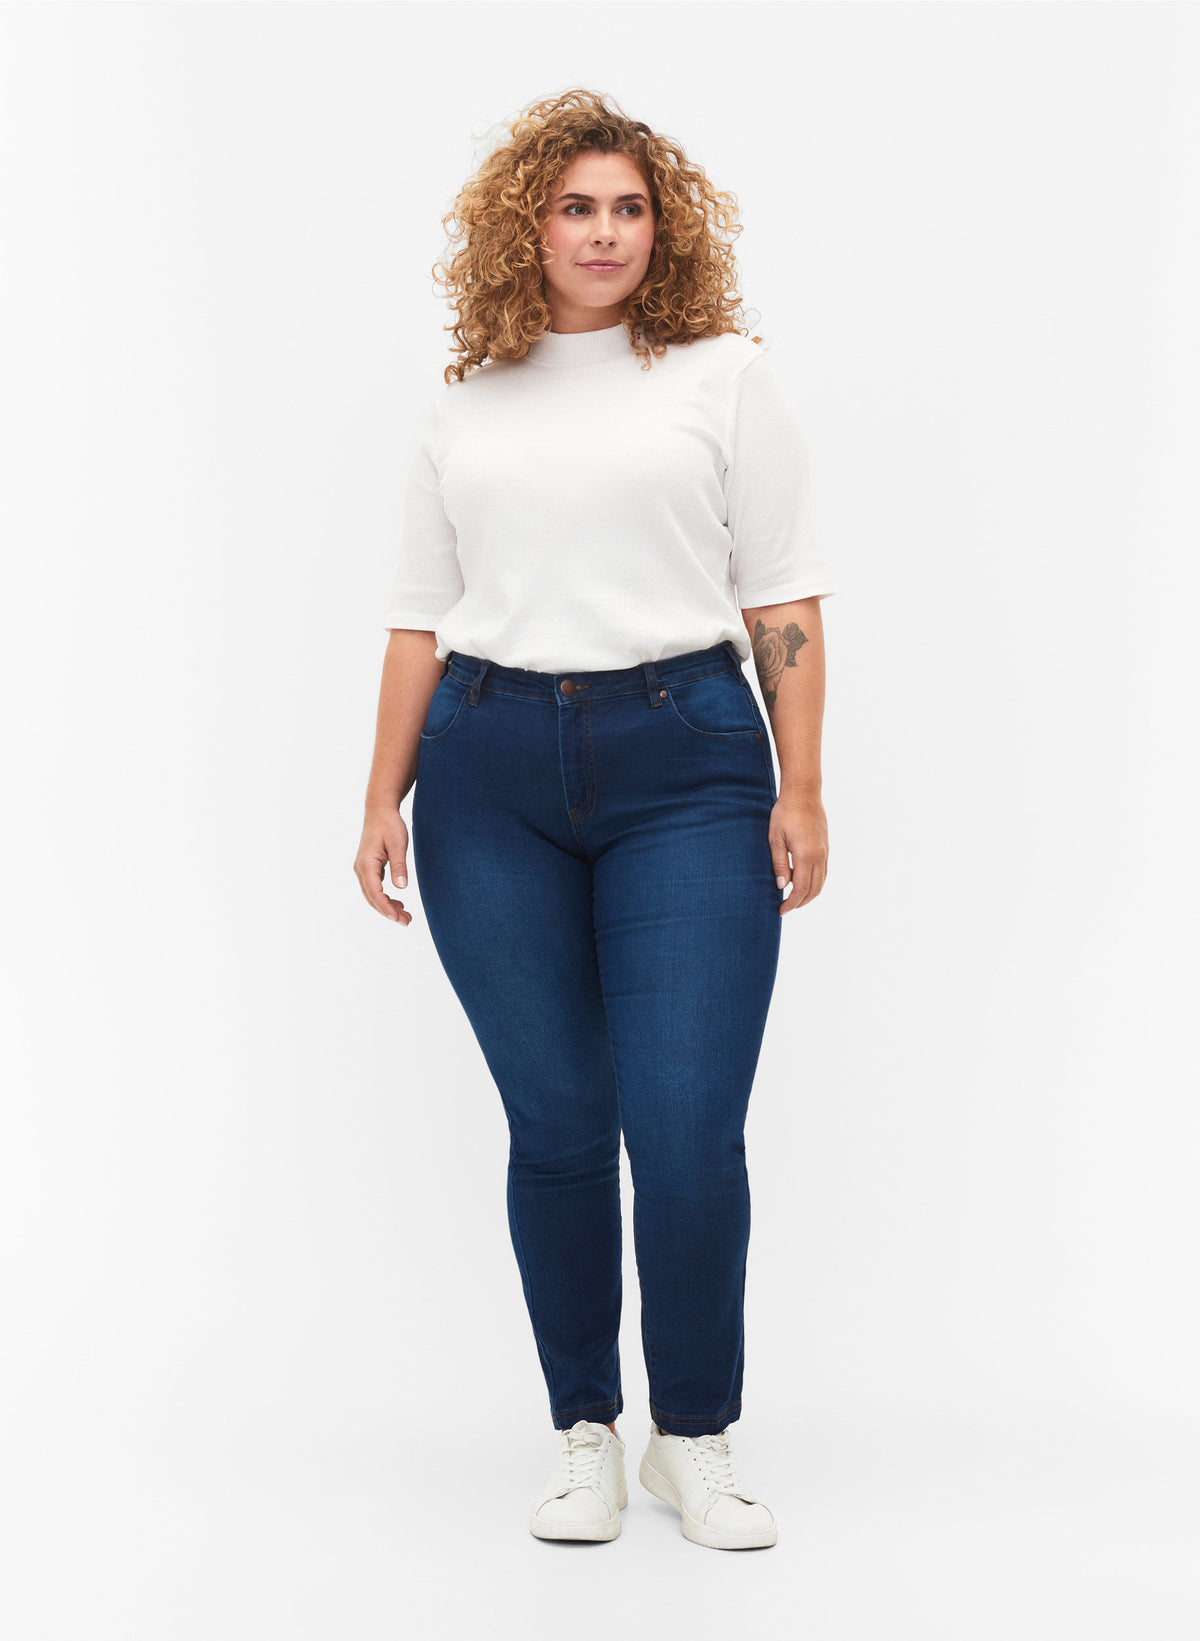 Women\'s Plus Size Jeans WardrobePlus Ireland 